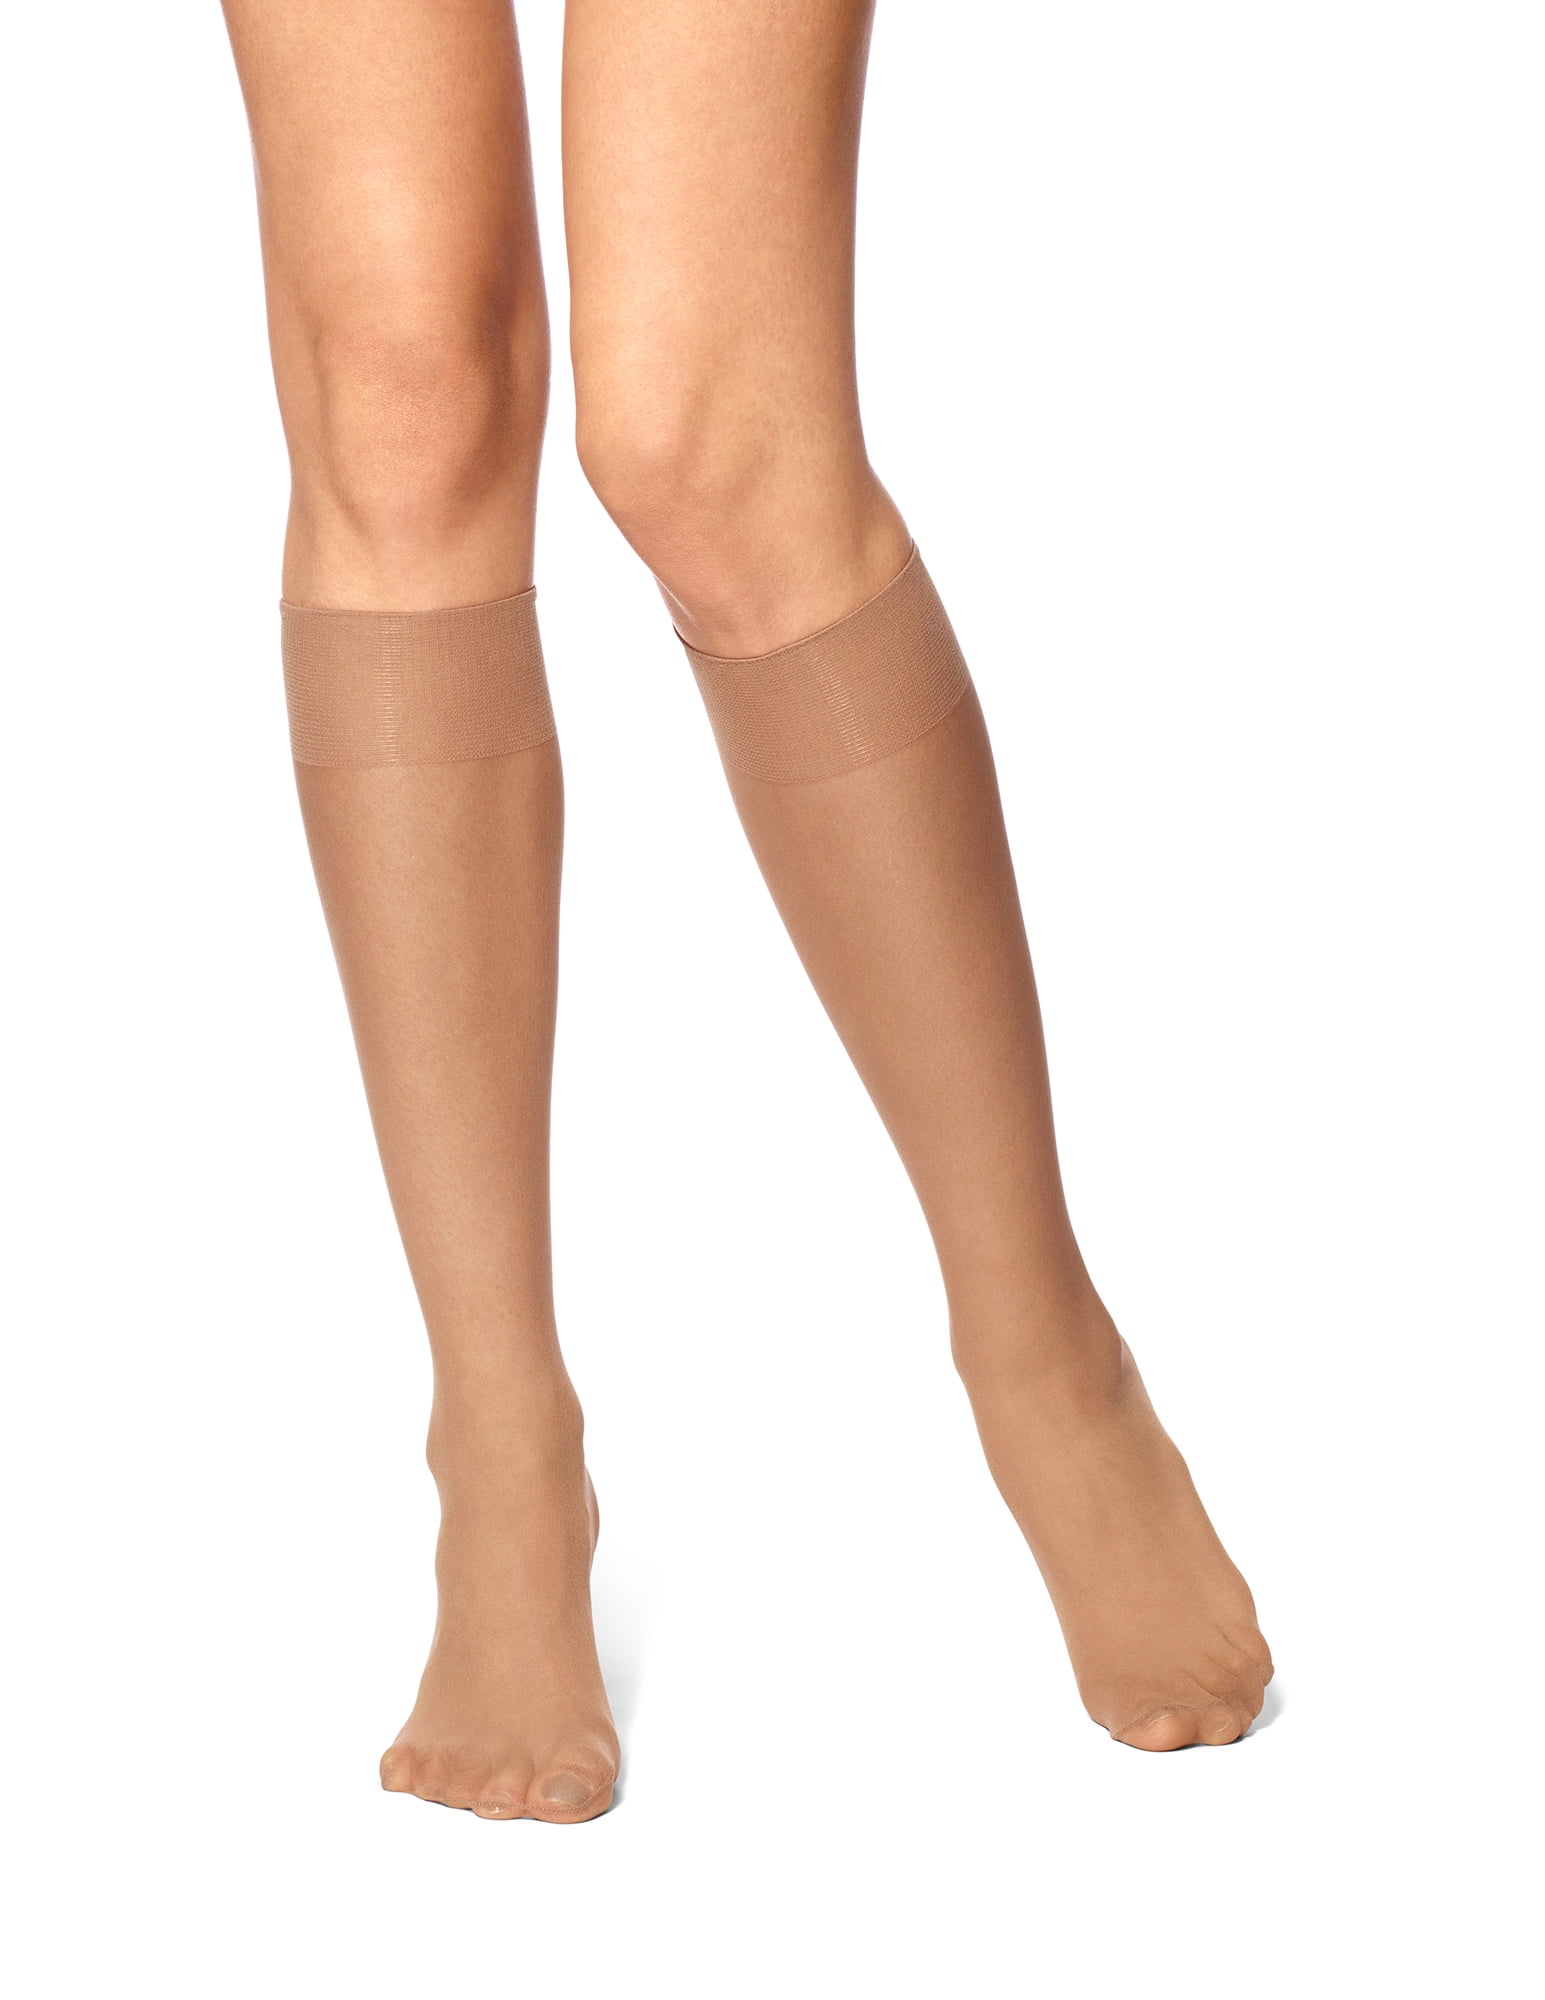 J.Ann Womens 6-Pack Sheer Knee High One Size